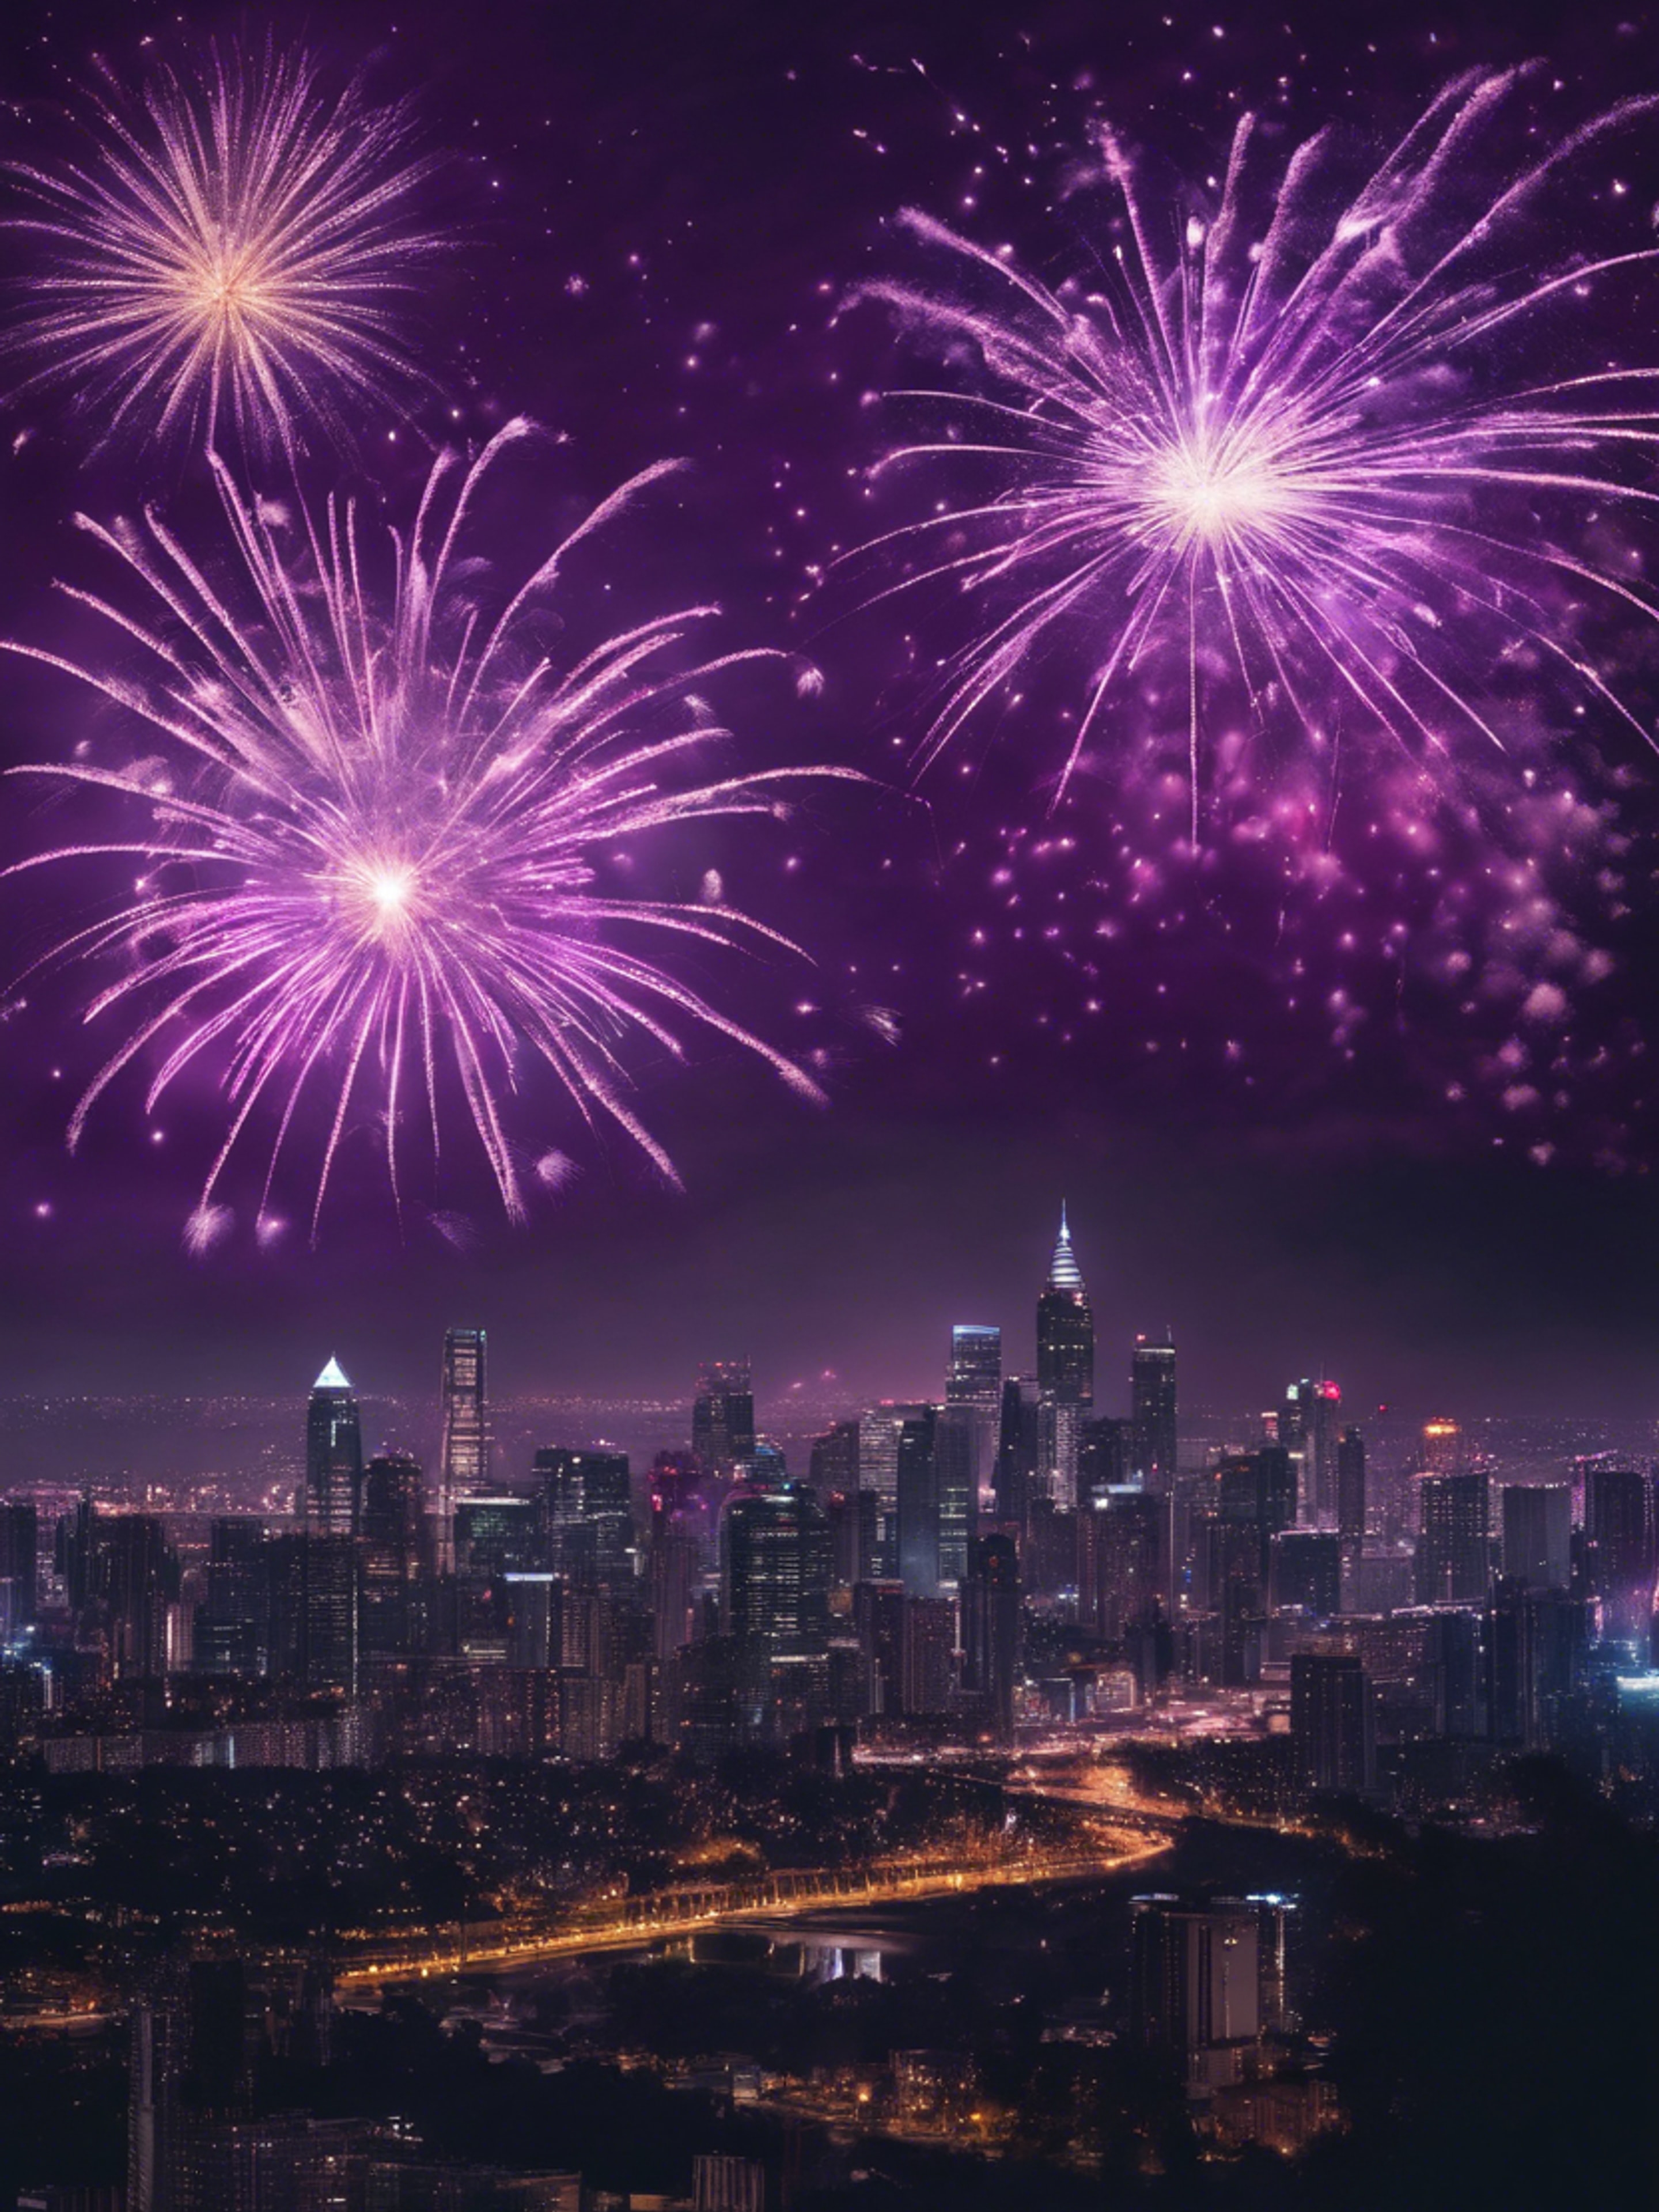 Dark purple fireworks illuminating the night's sky over an illuminated city skyline.壁紙[a2398988017f44d3a04c]